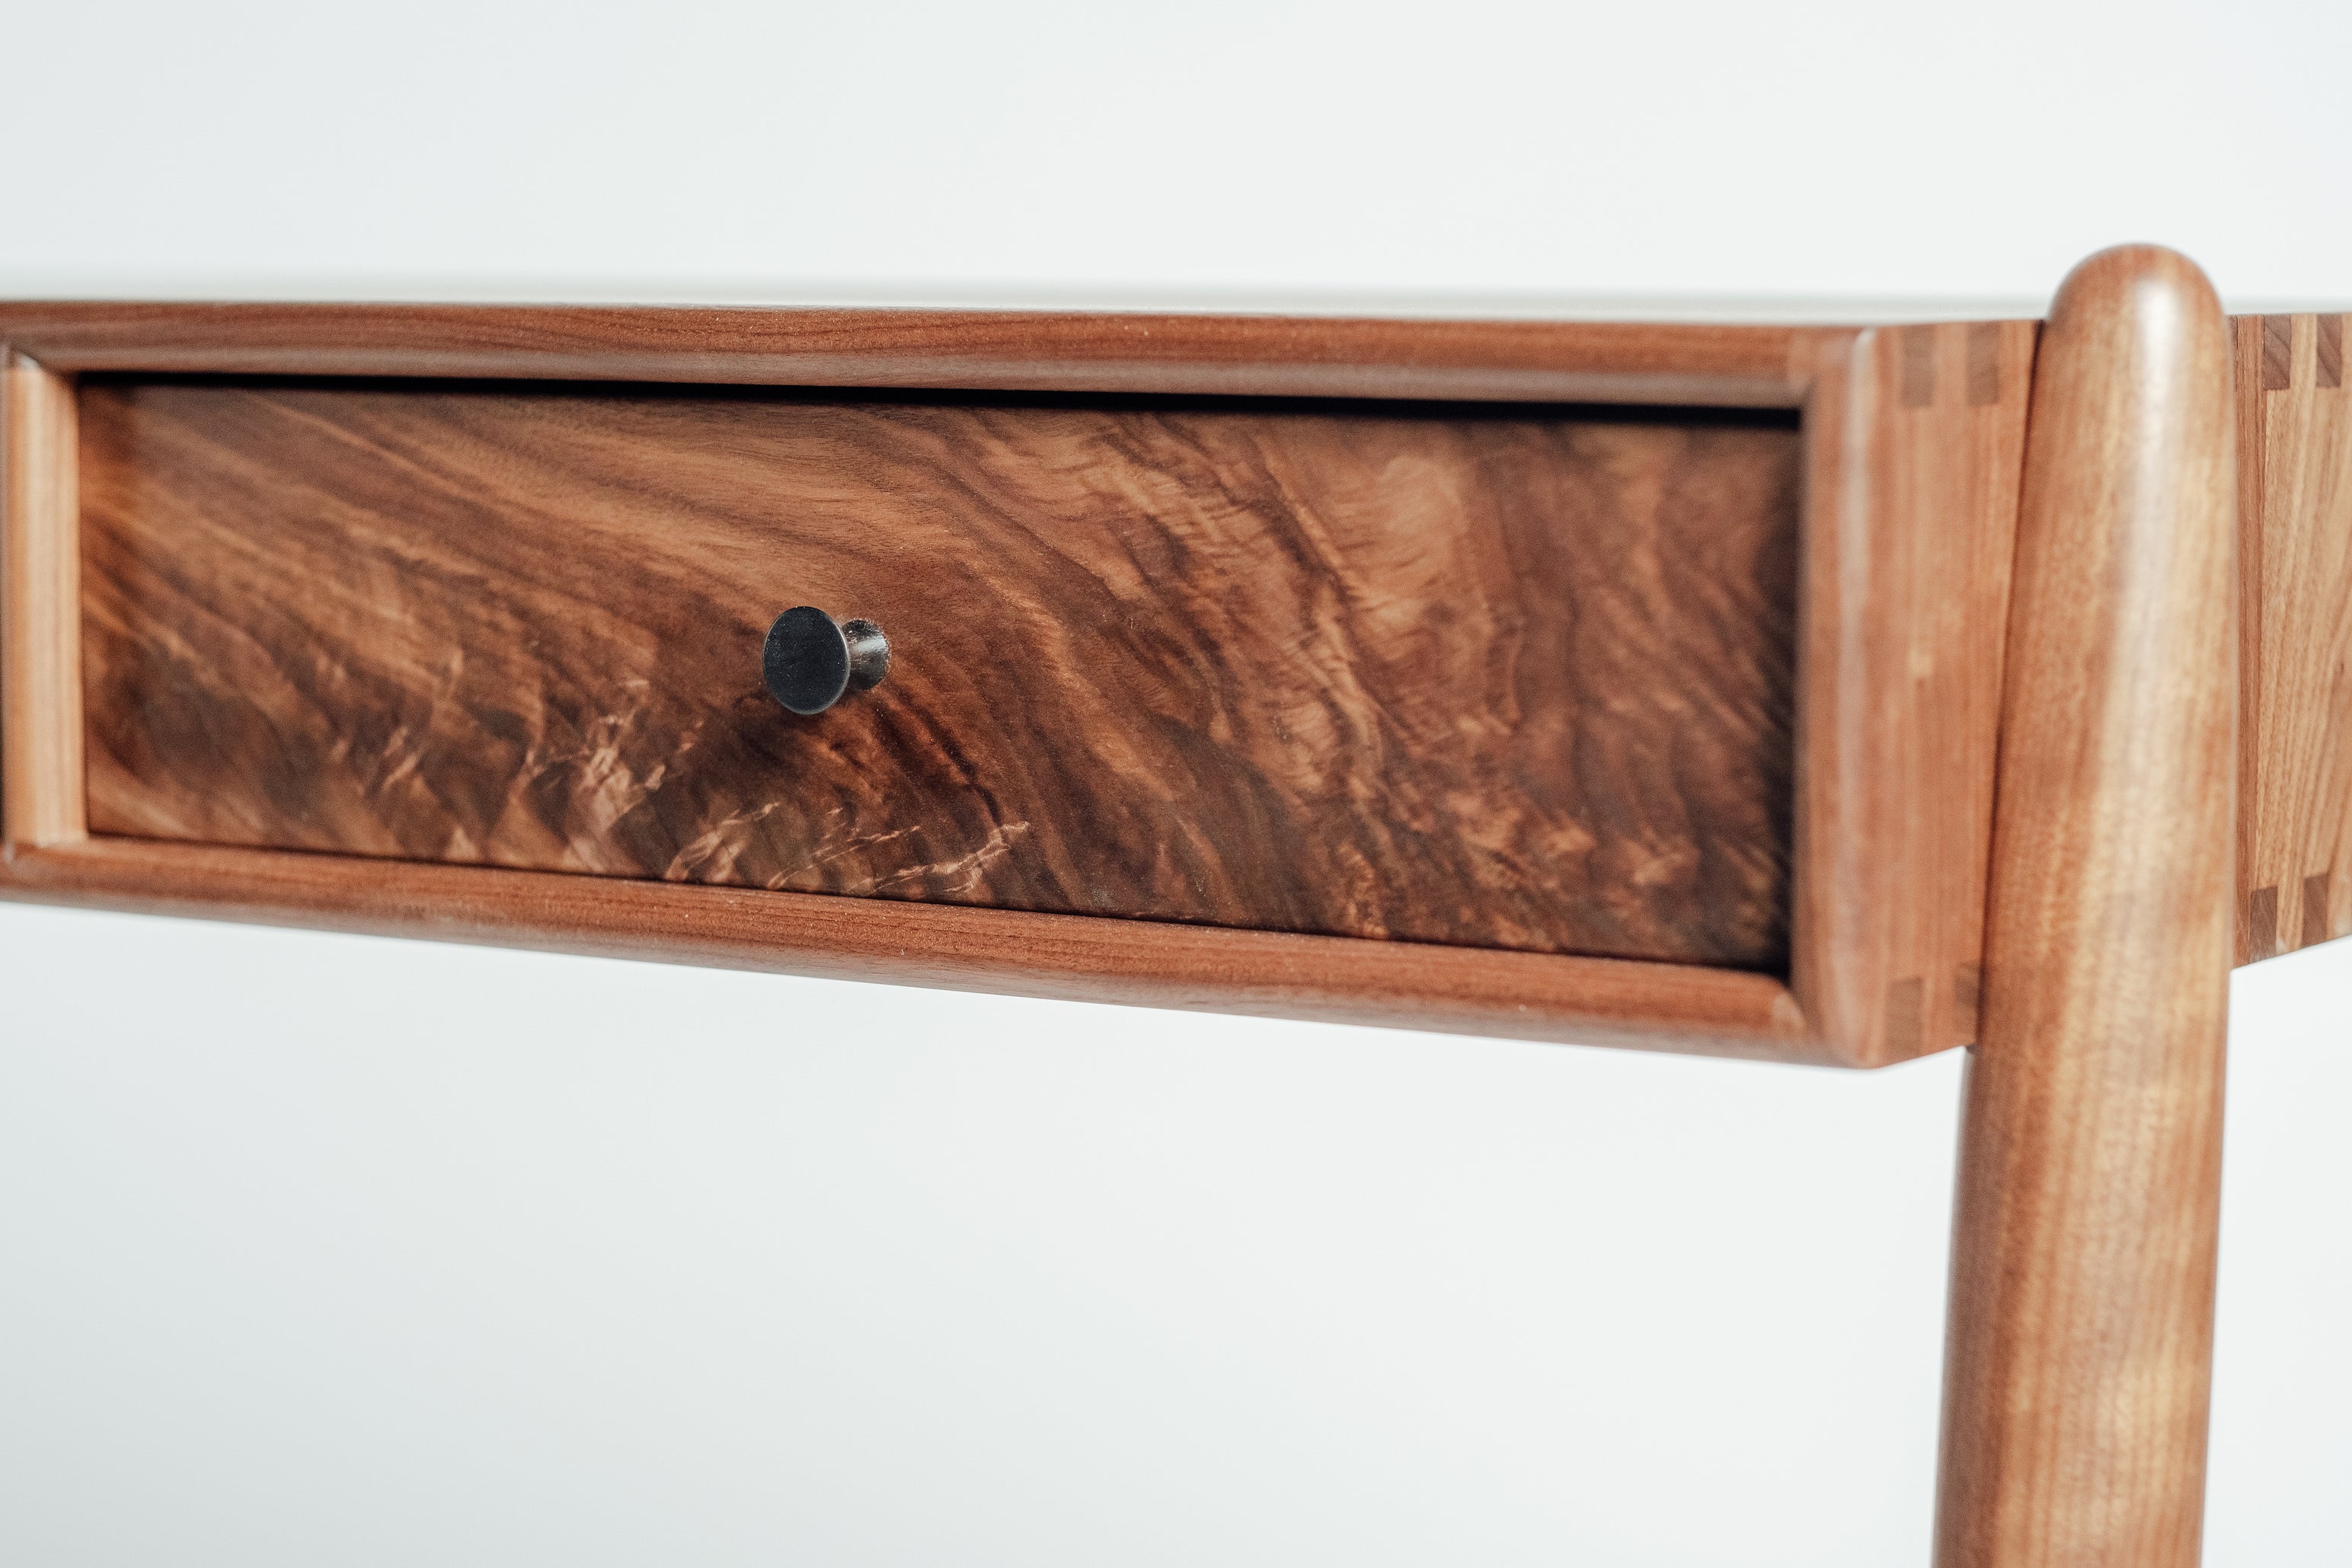 Solomon midcentury modern walnut wood Console Desk handcrafted by Hunt & Noyer in Michigan